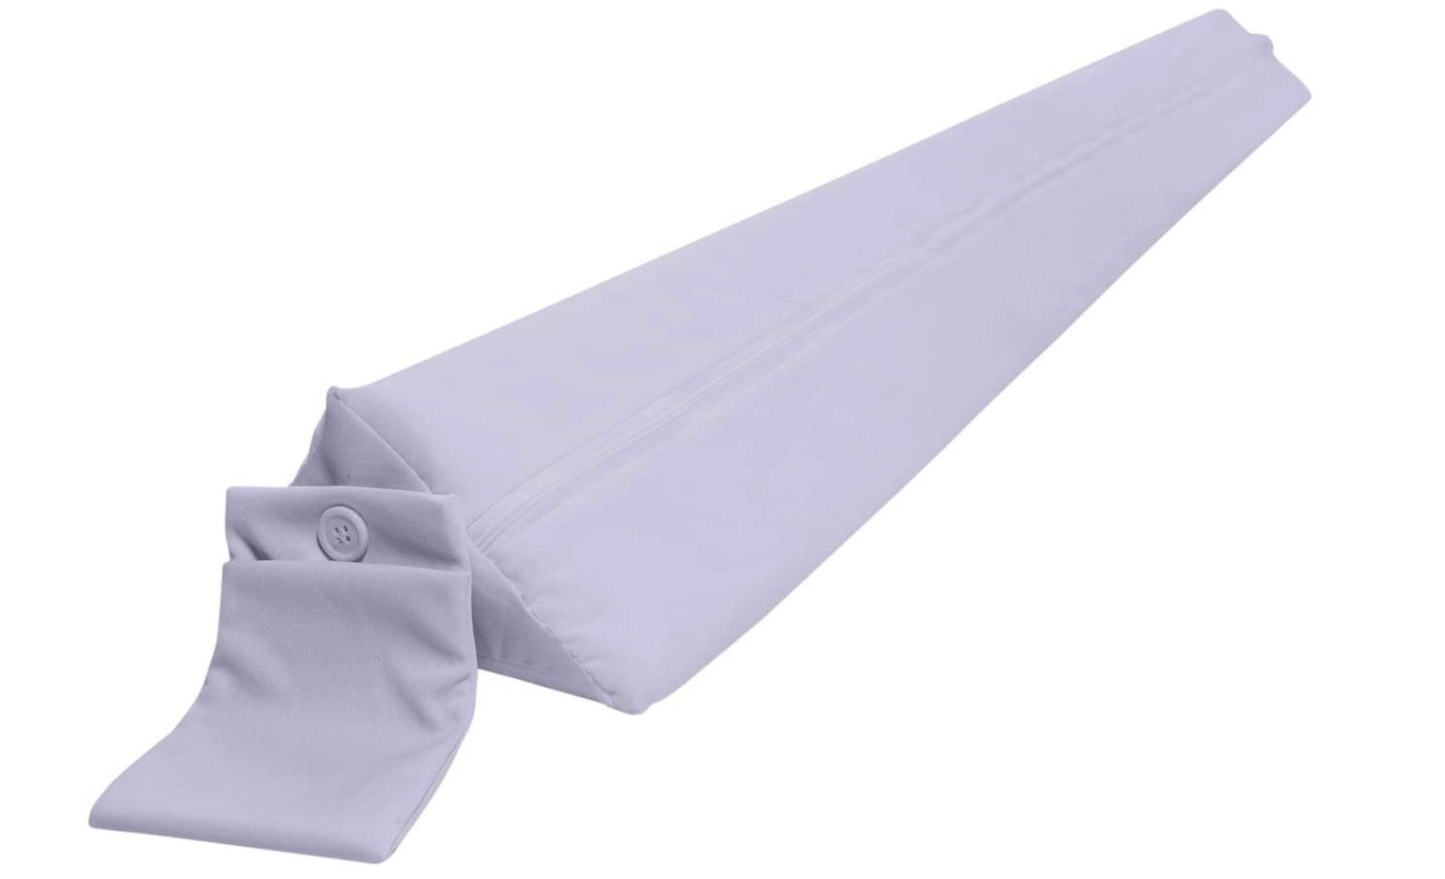 Twin Pillowcase Gray